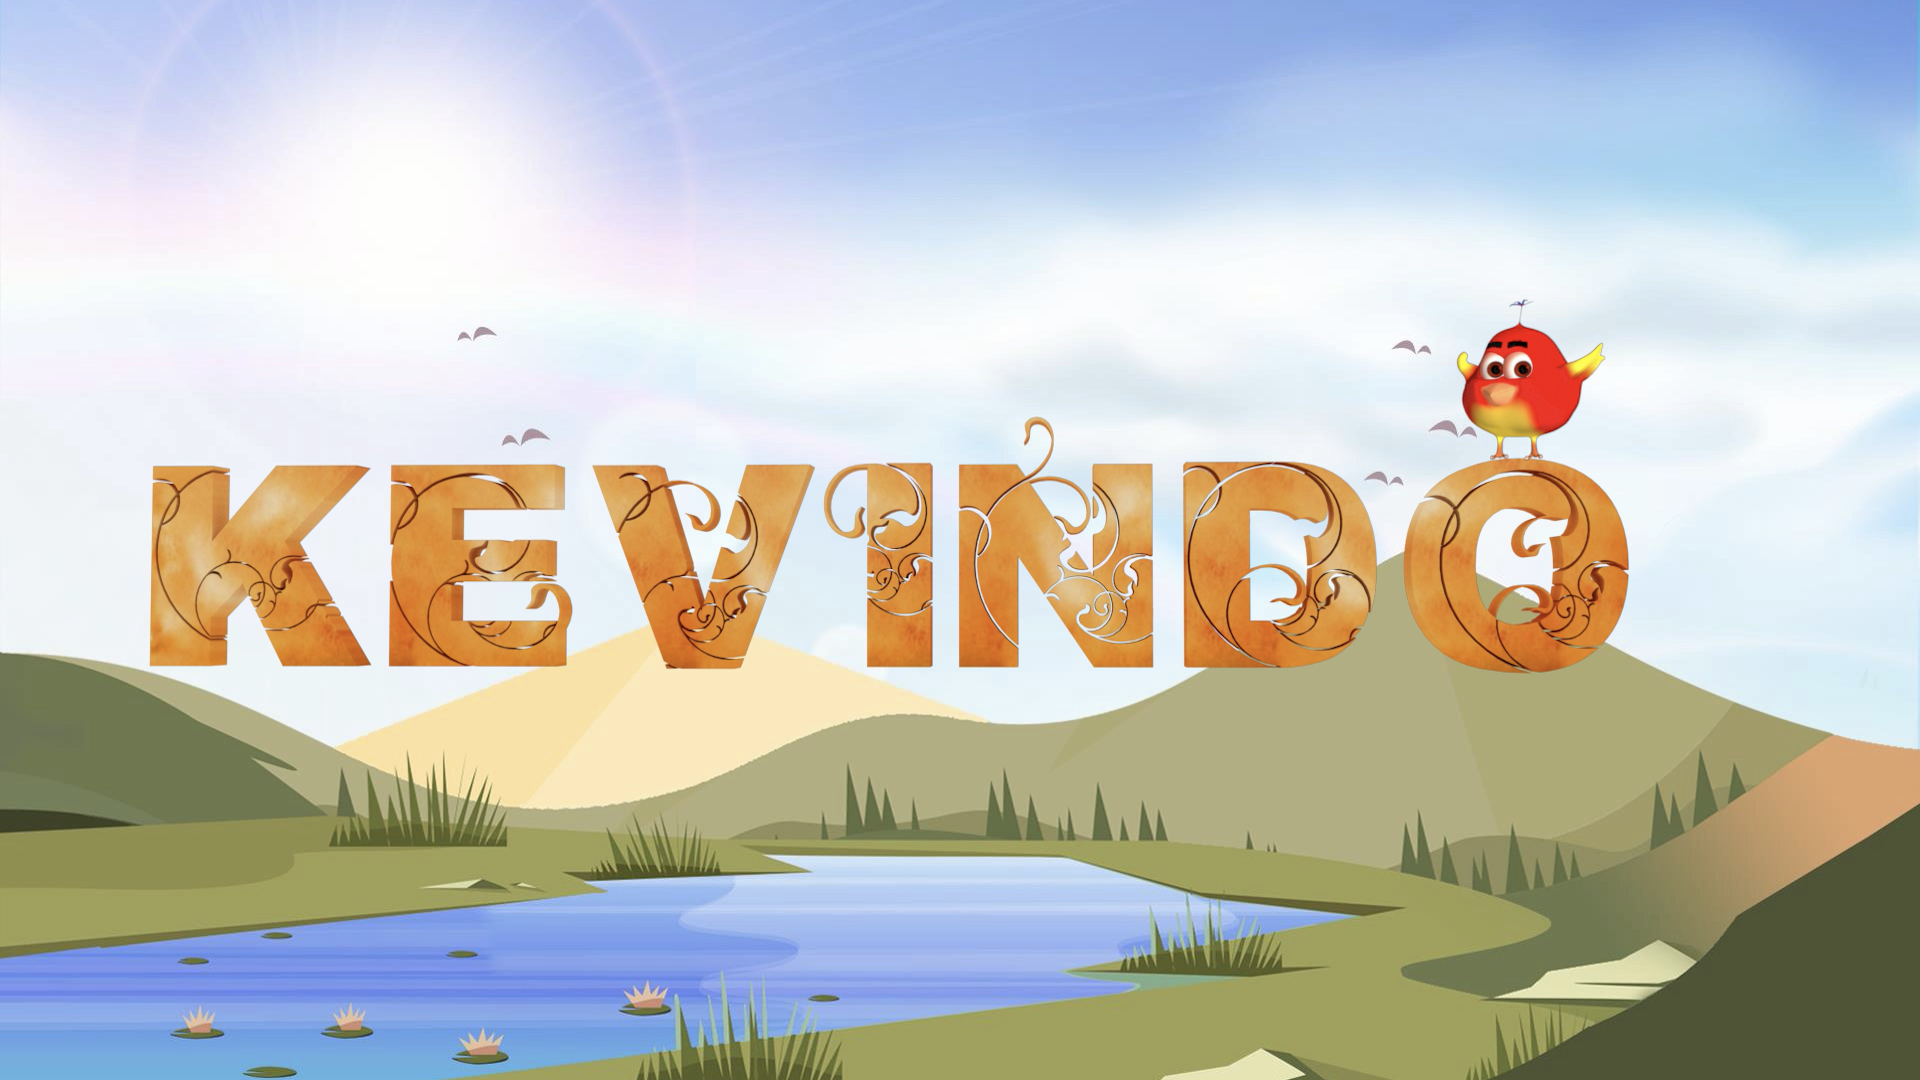 Kevindo - Bird Adventure